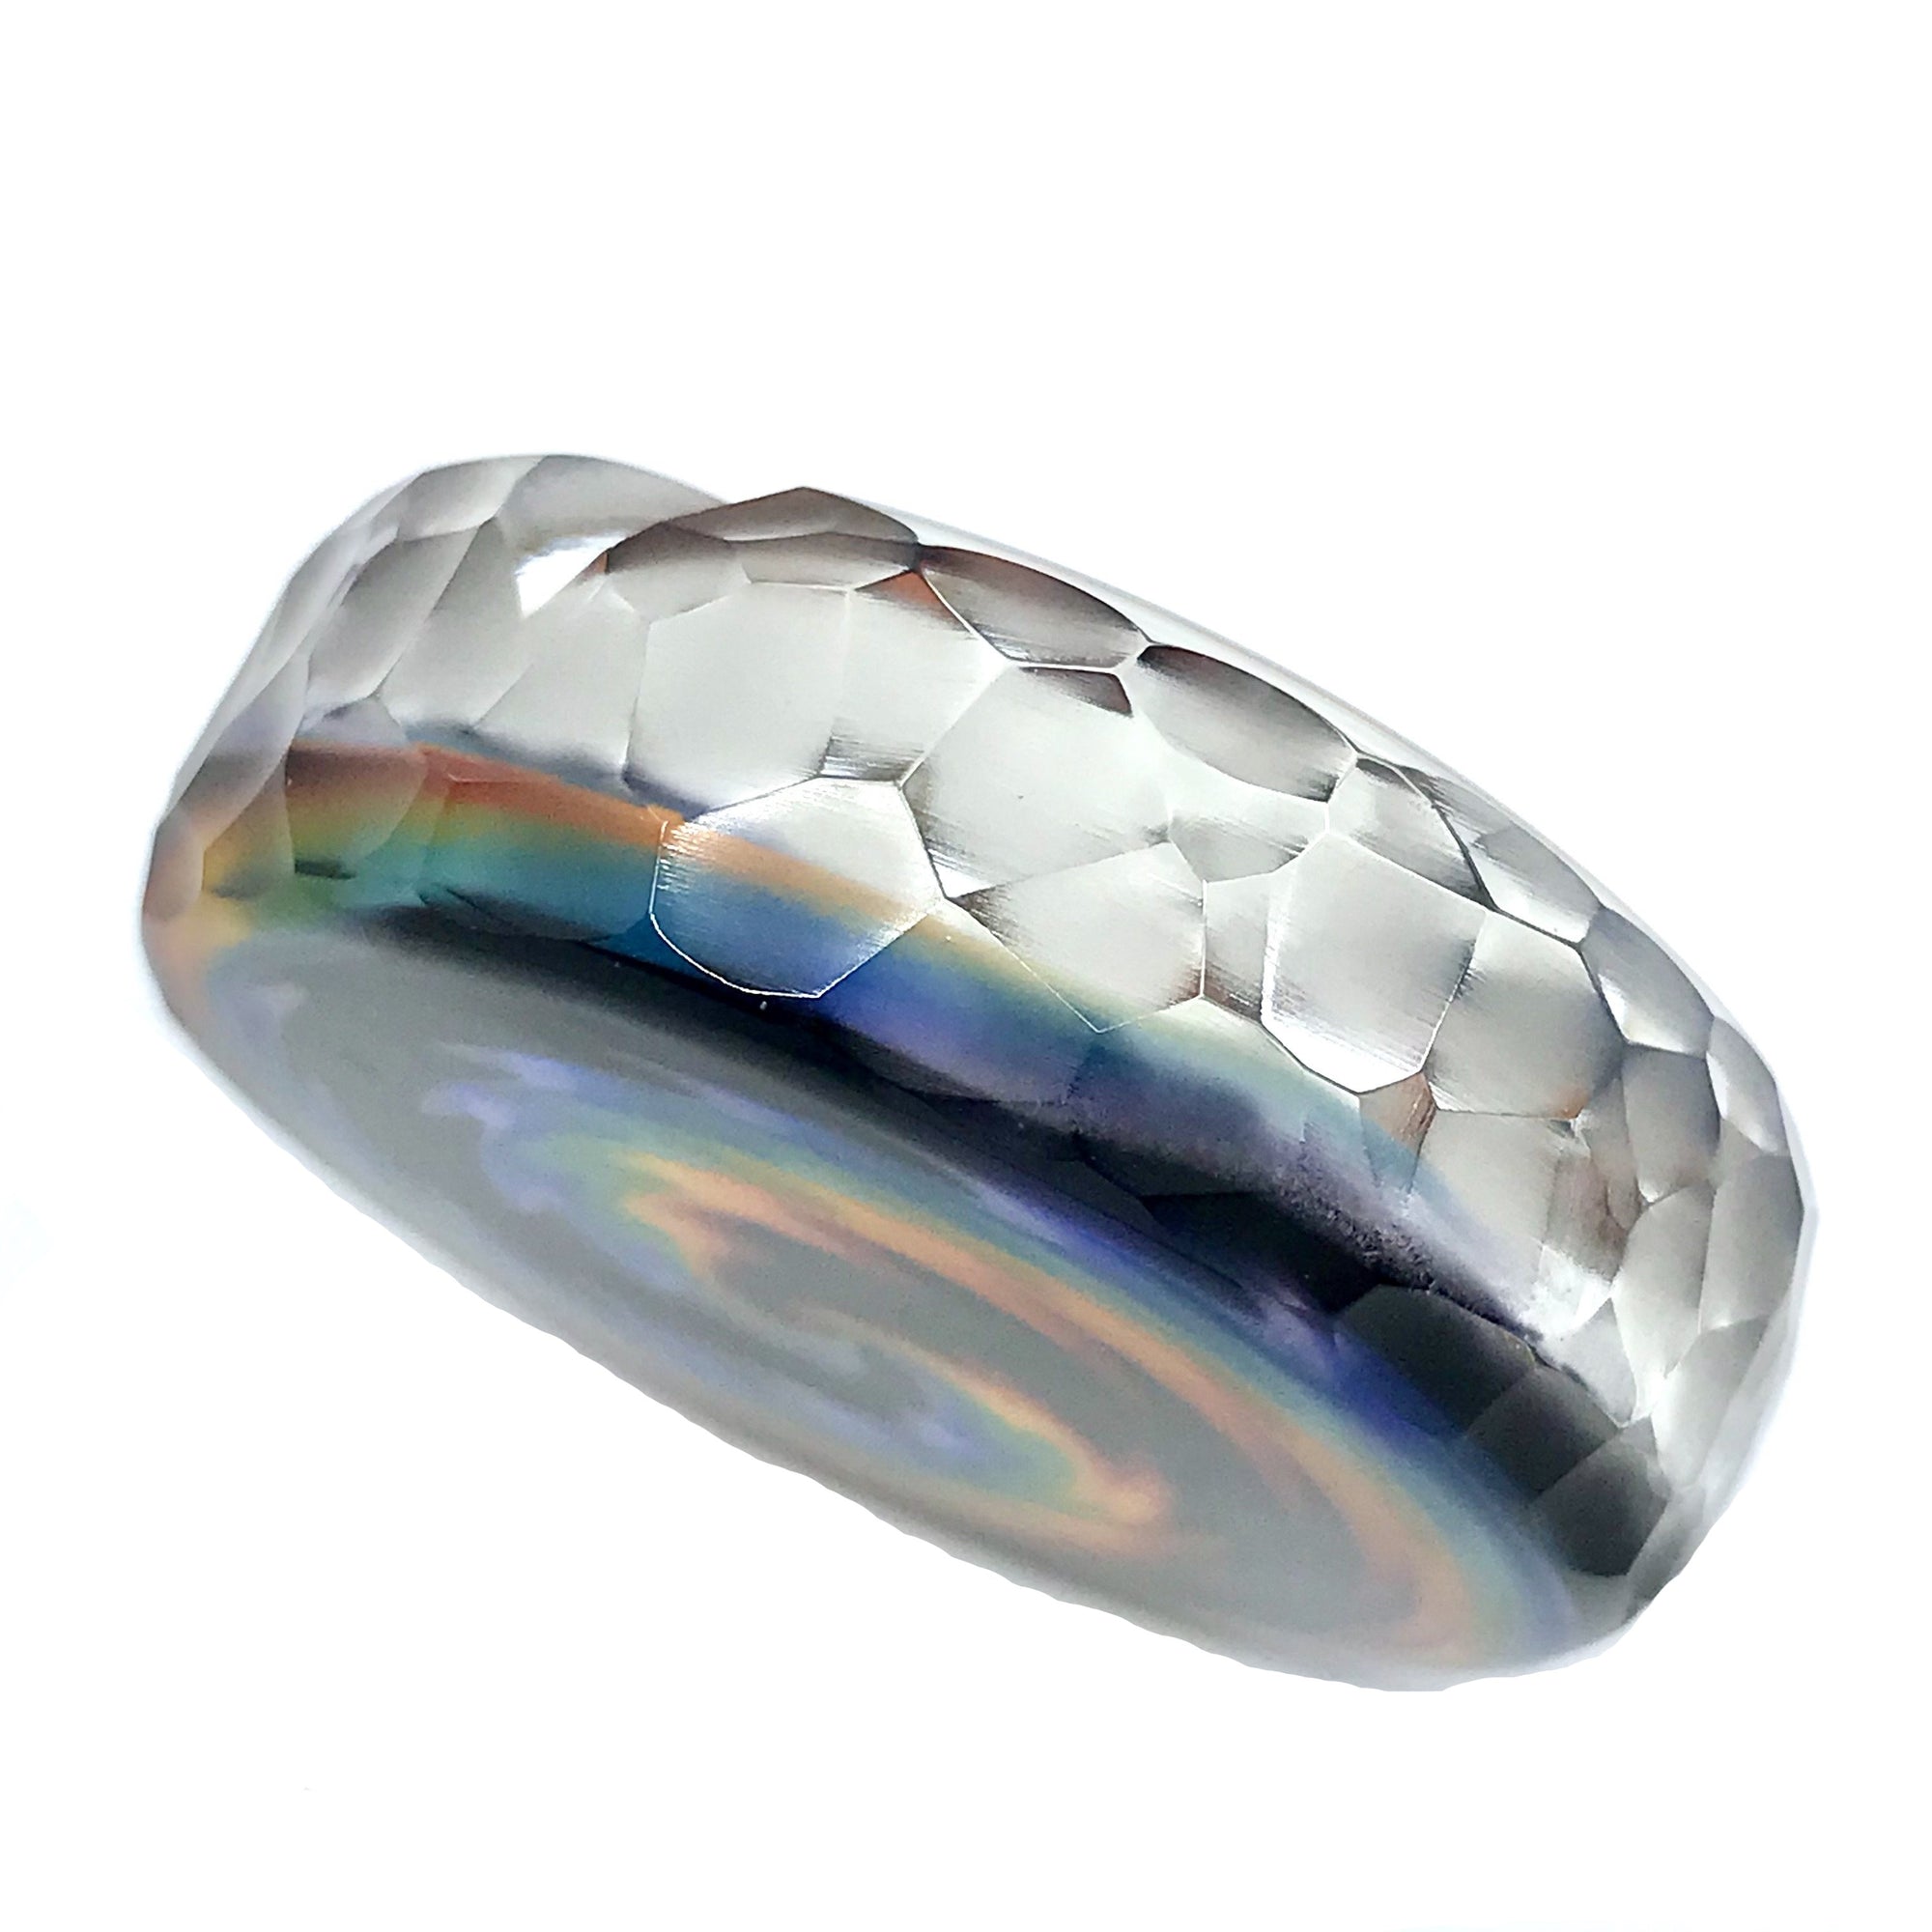 Str8 Glass x 8mm Glass Linework Triple Intake Spinner Cap (Rainbow)